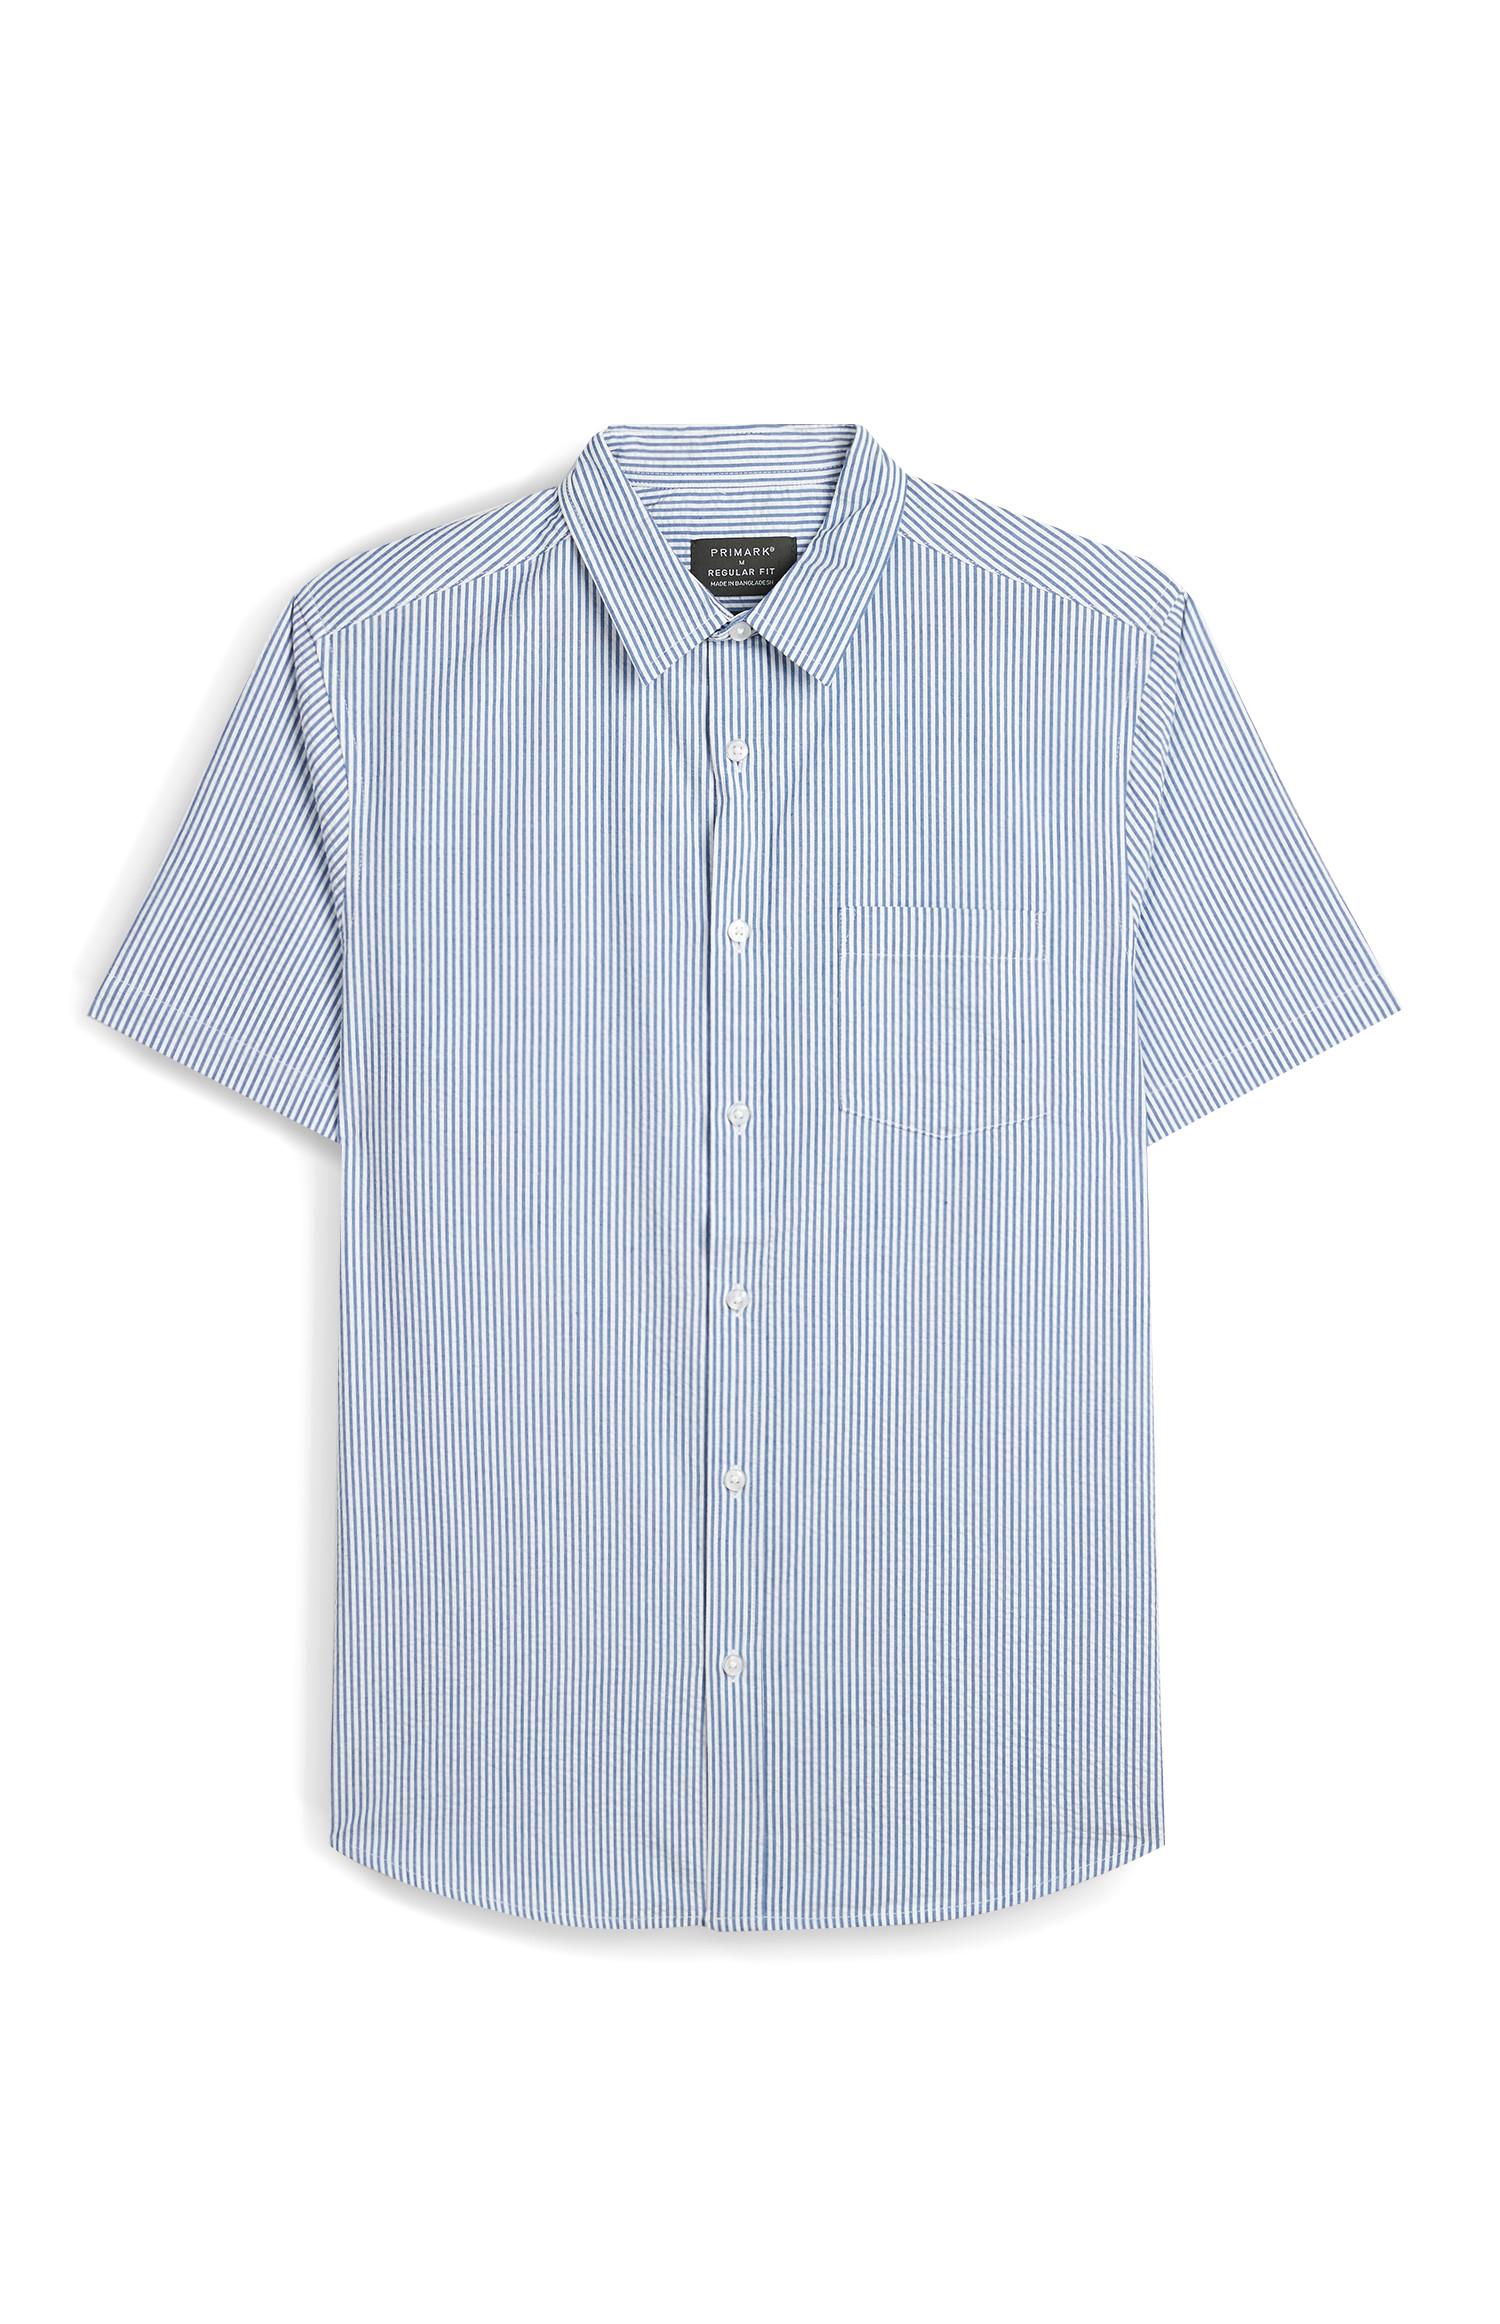 Shirts For Men Denim Long Sleeve Shirts Primark Uk - grey striped shirt with denim jacket roblox grey stripes